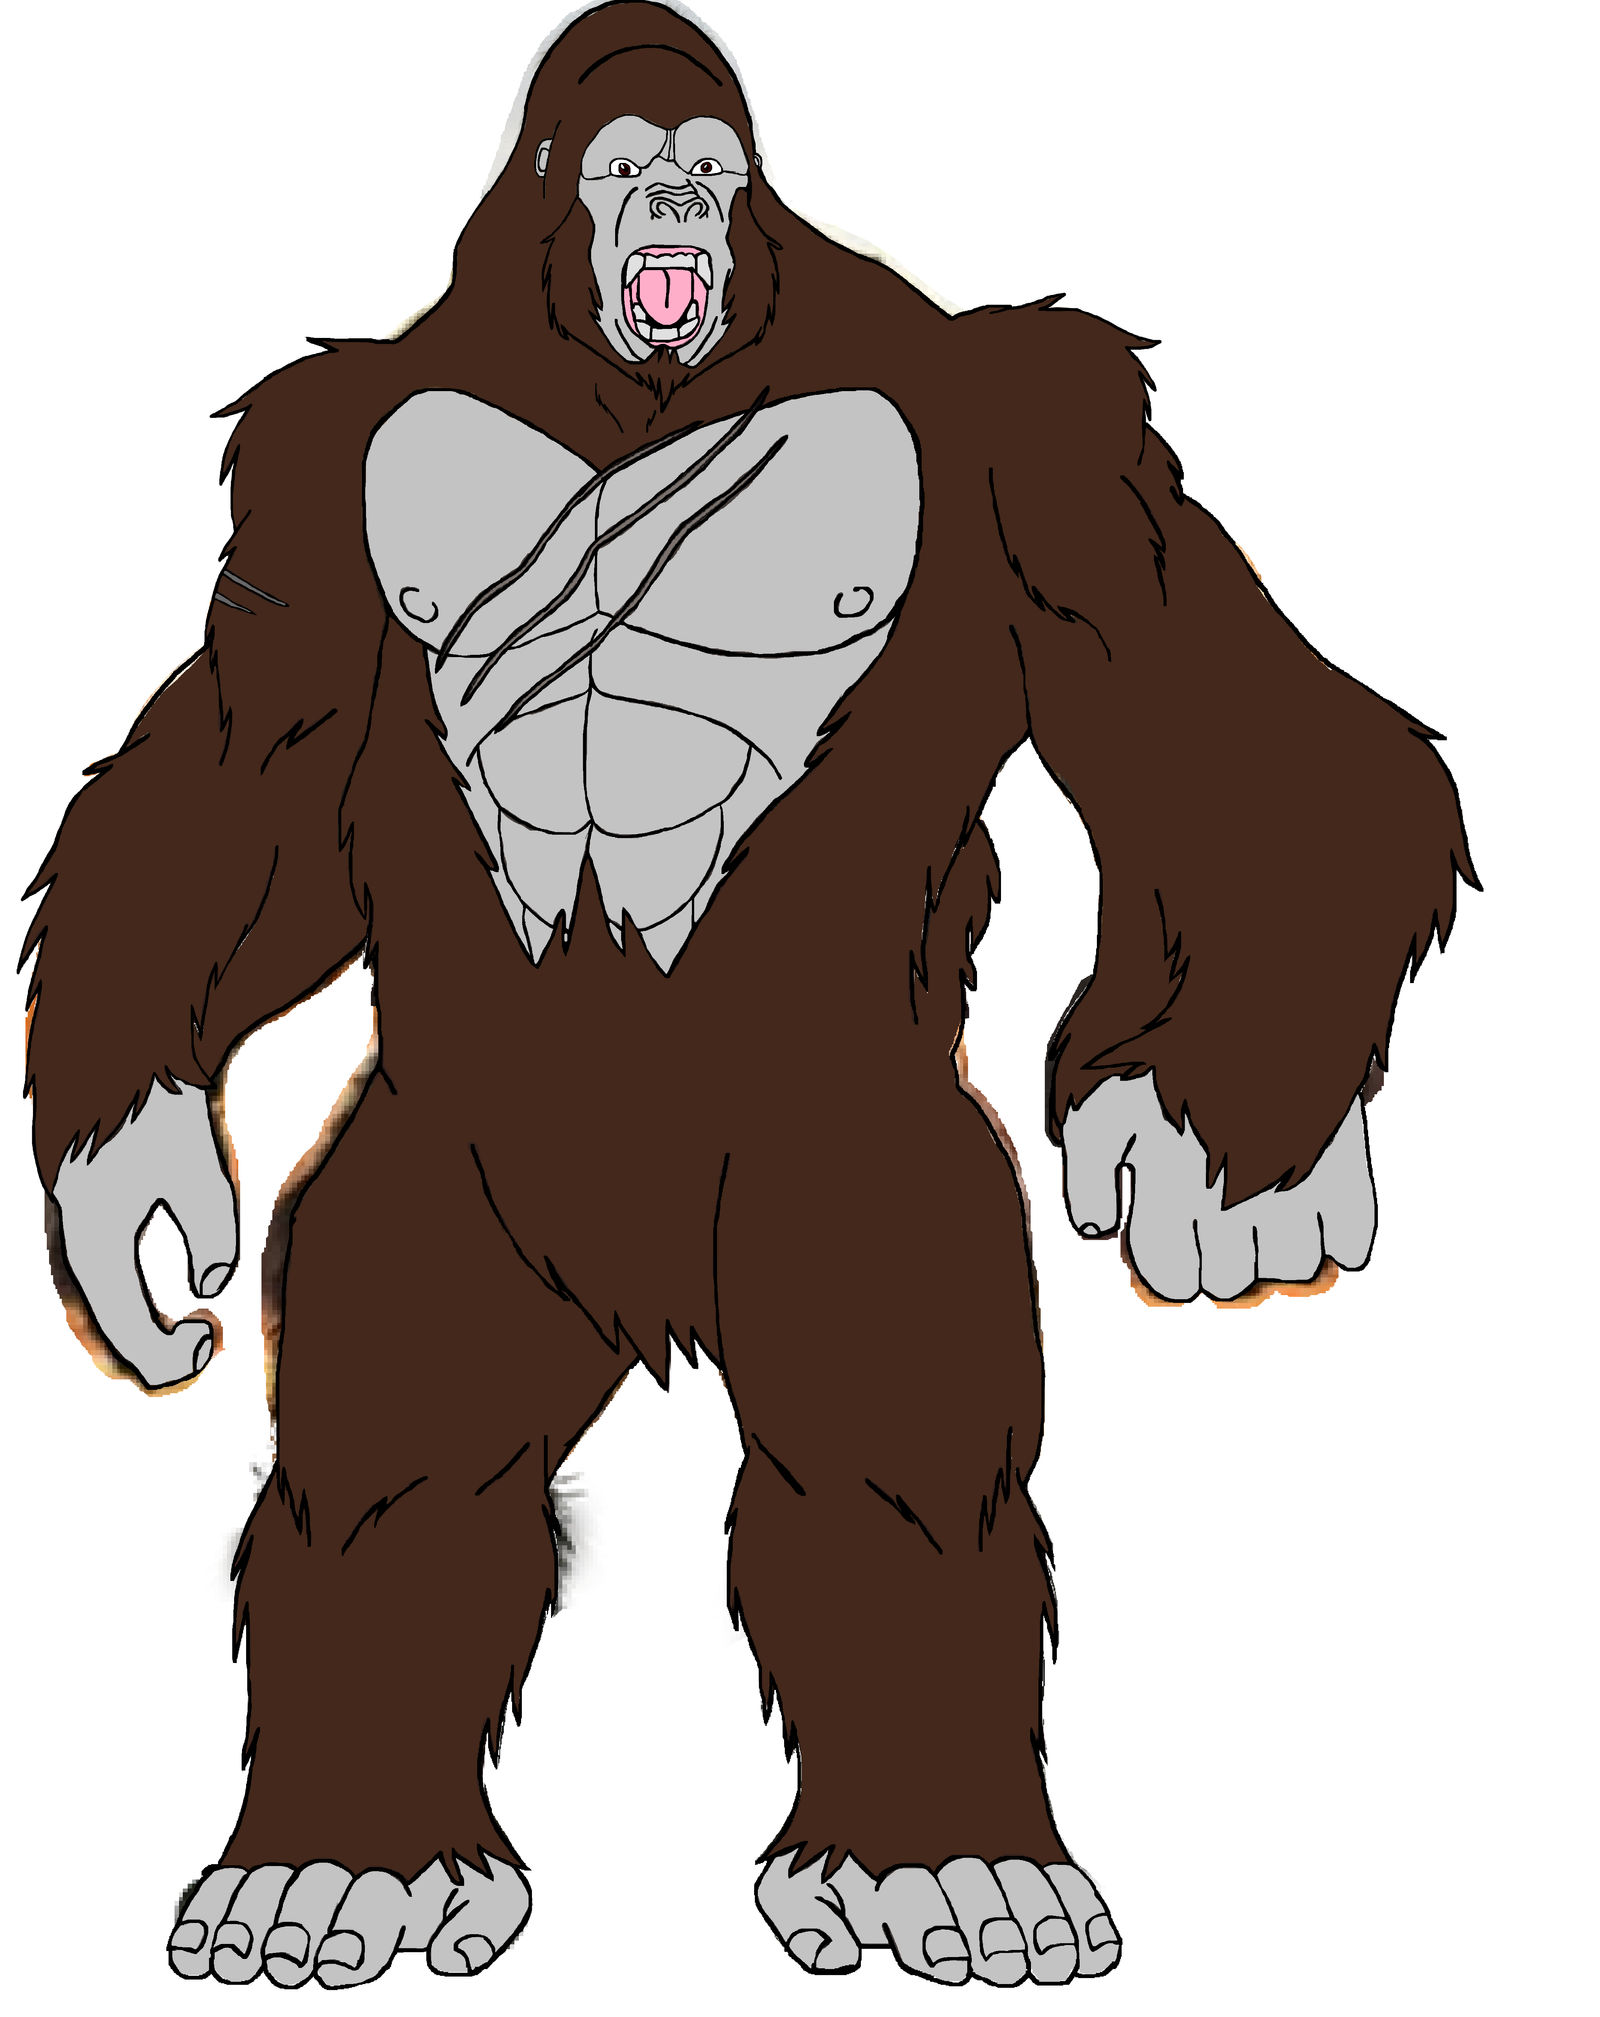 King Kong (MonsterVerse) Fully Grown by leivbjerga on DeviantArt